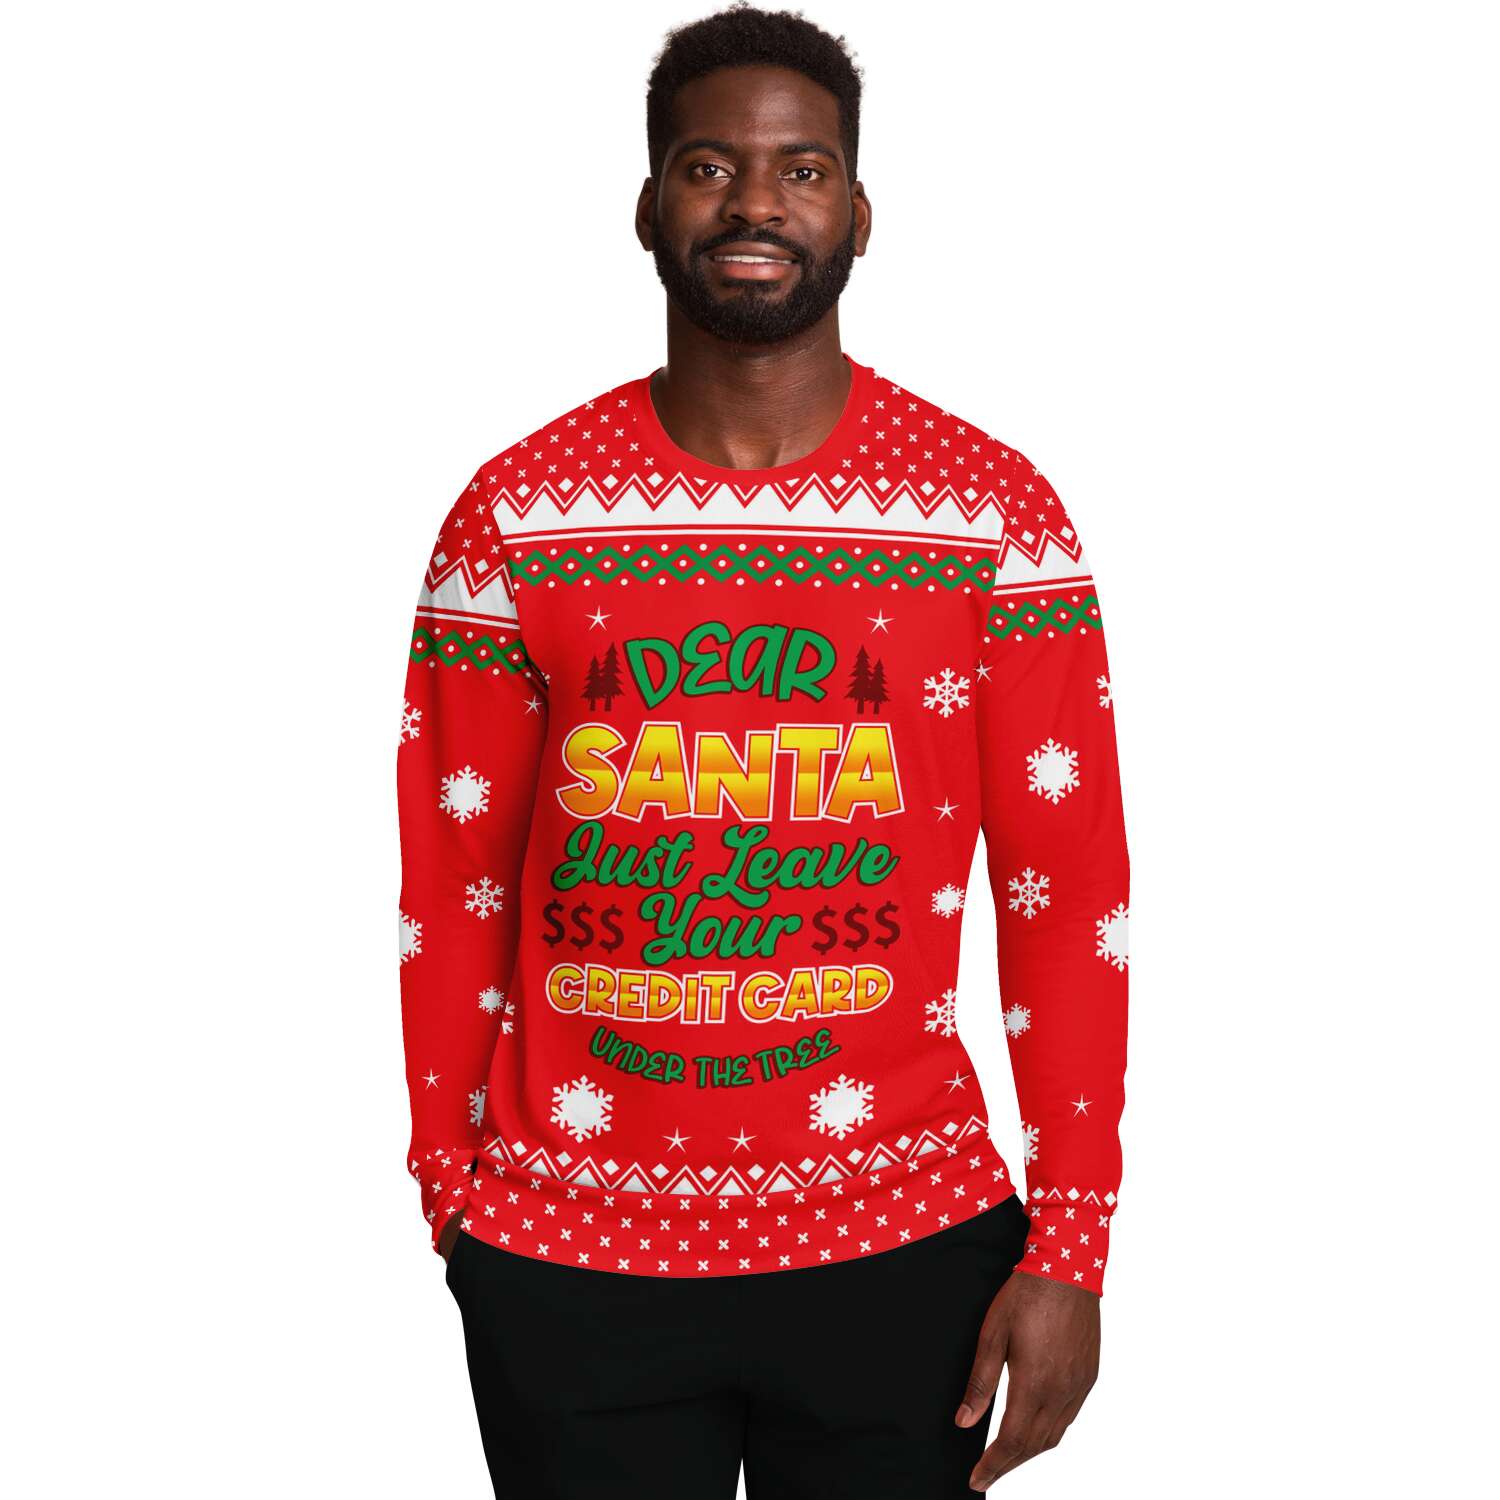 Santa Leave Your Credit Card Ugly Christmas Sweatshirt Fashion Sweatshirt - AOP Subliminator 